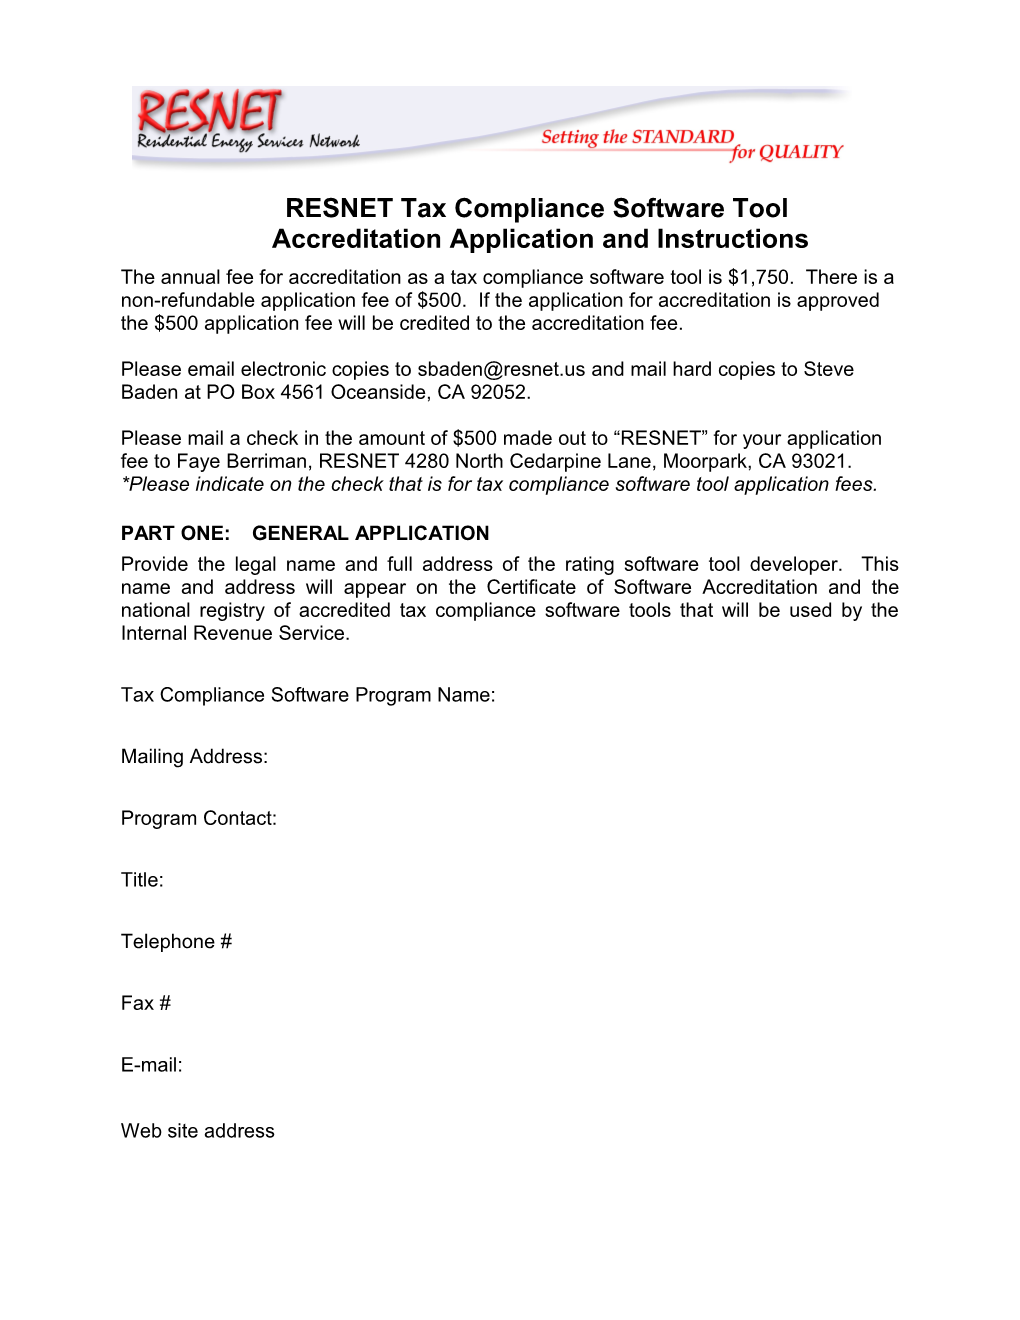 RESNET Tax Compliance Software Tool